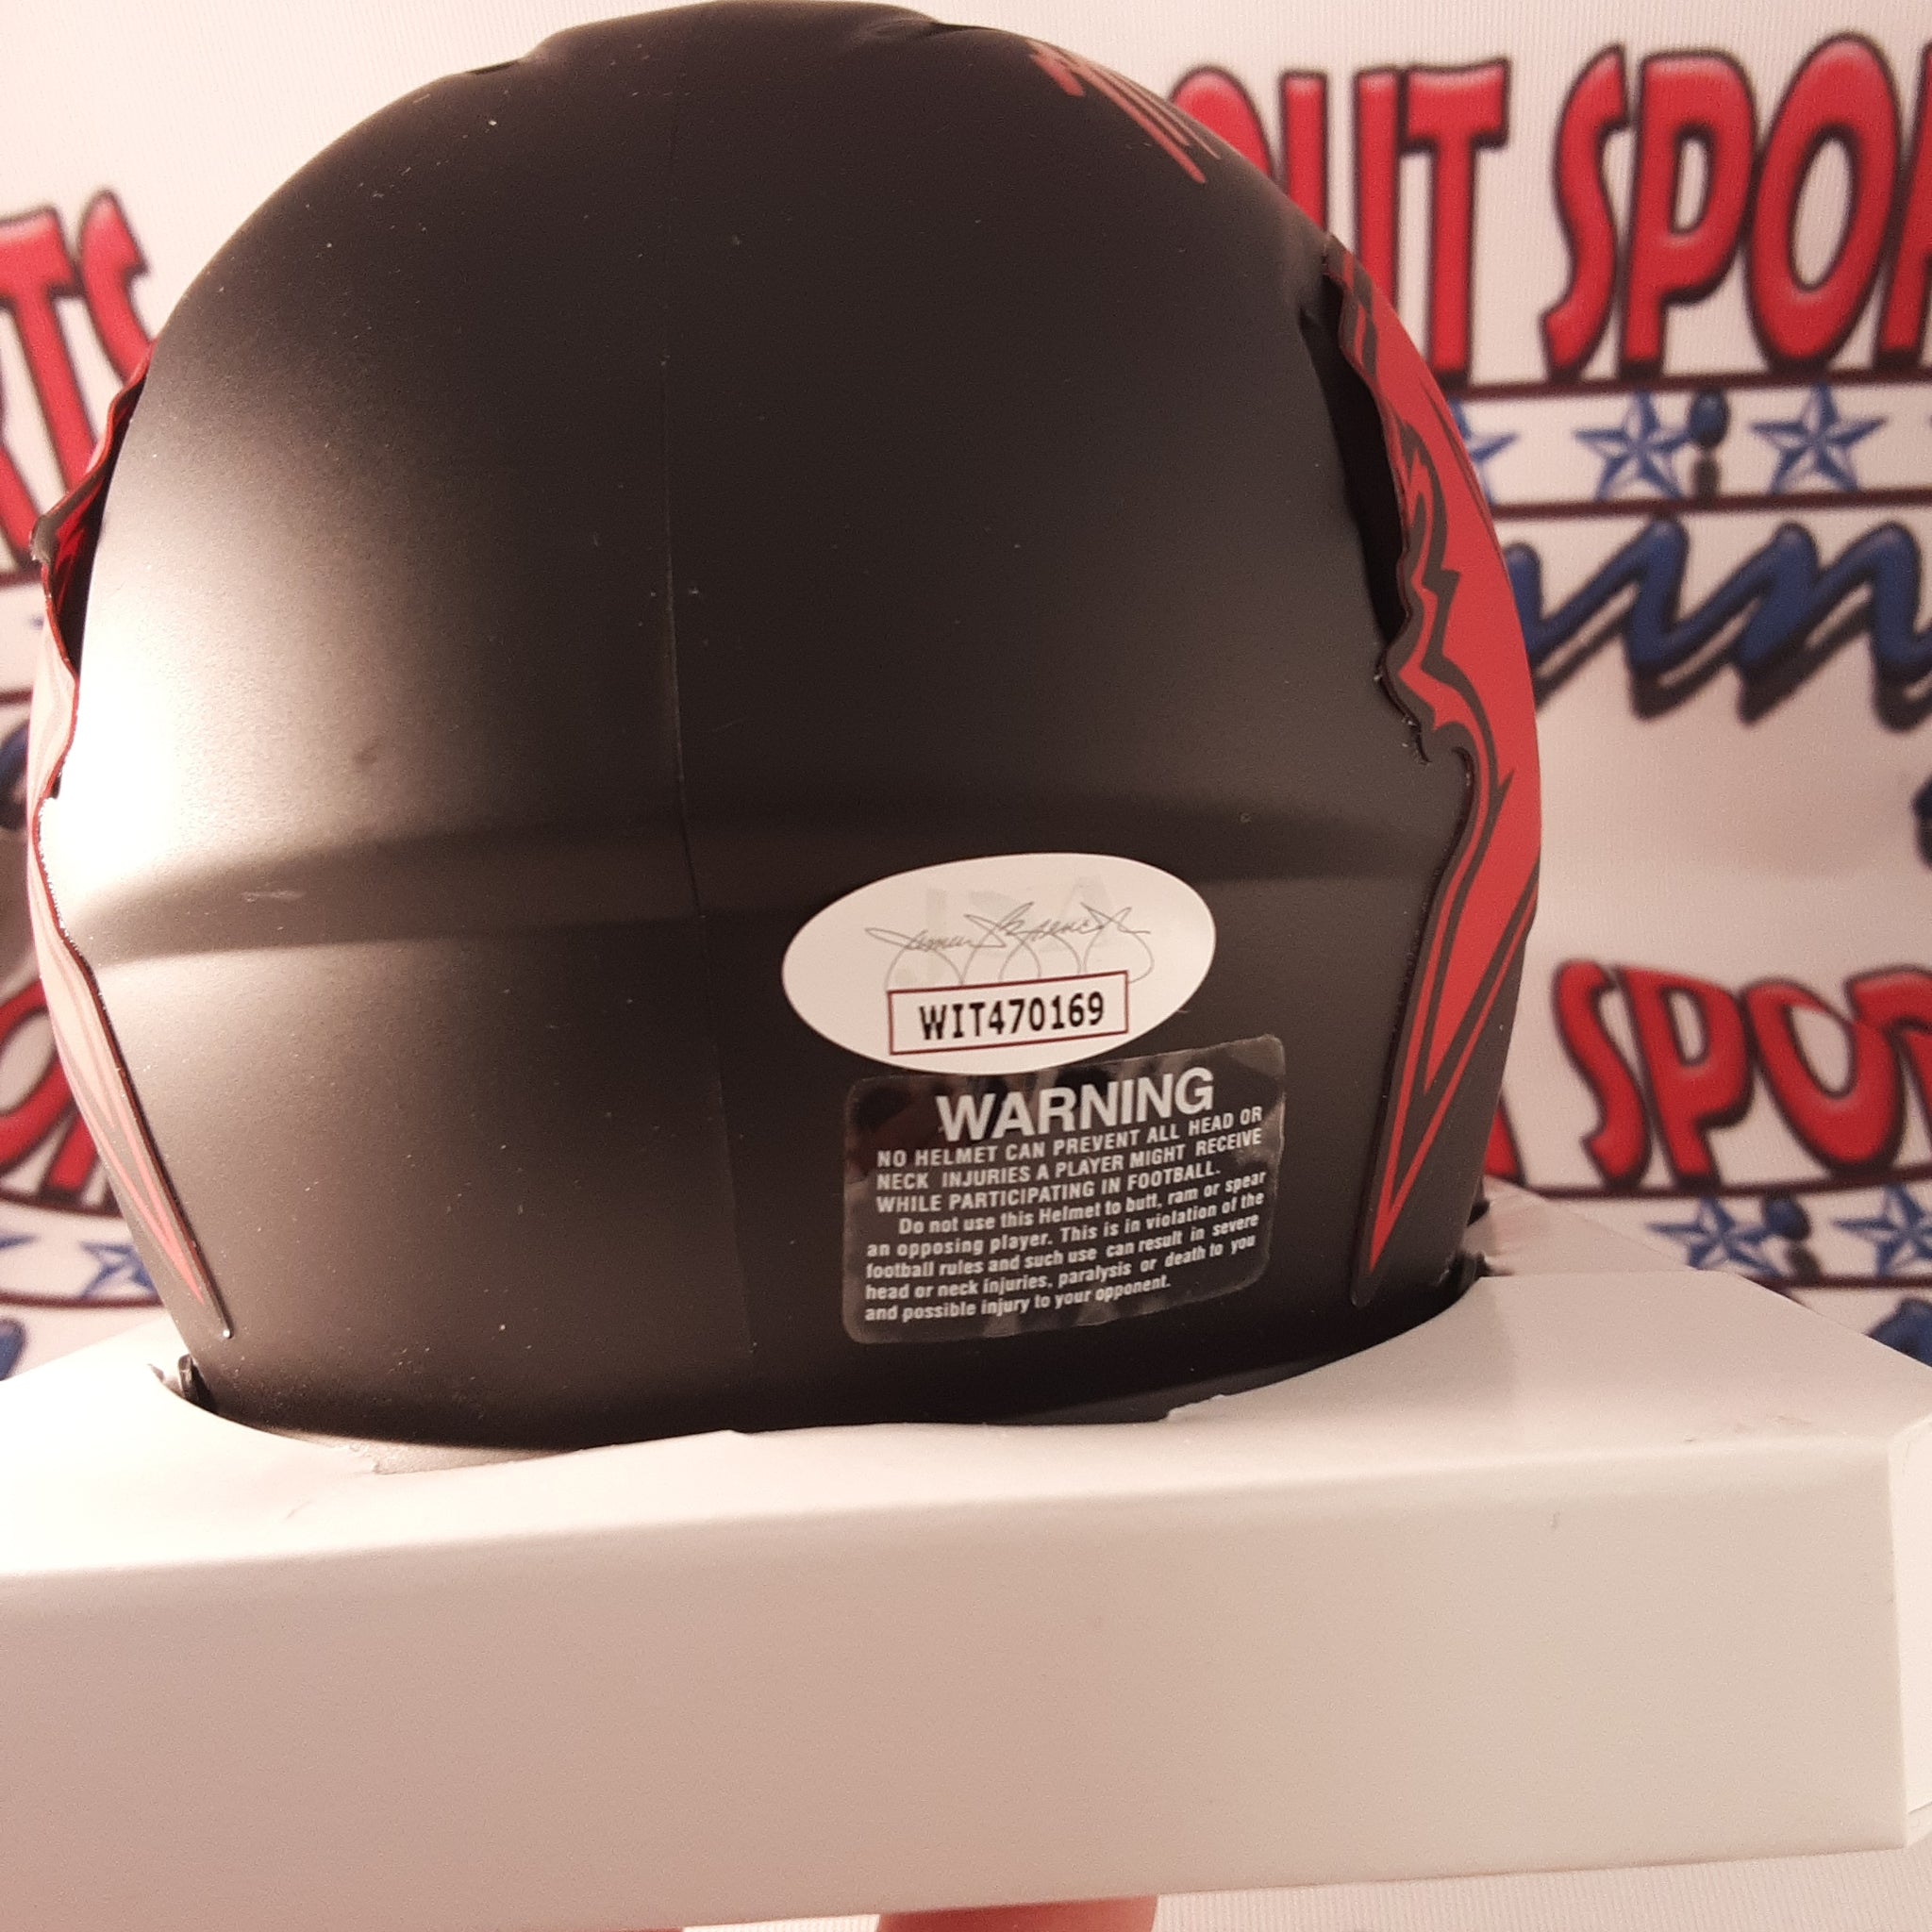 Mike Edwards Authentic Signed Autographed Mini Helmet JSA